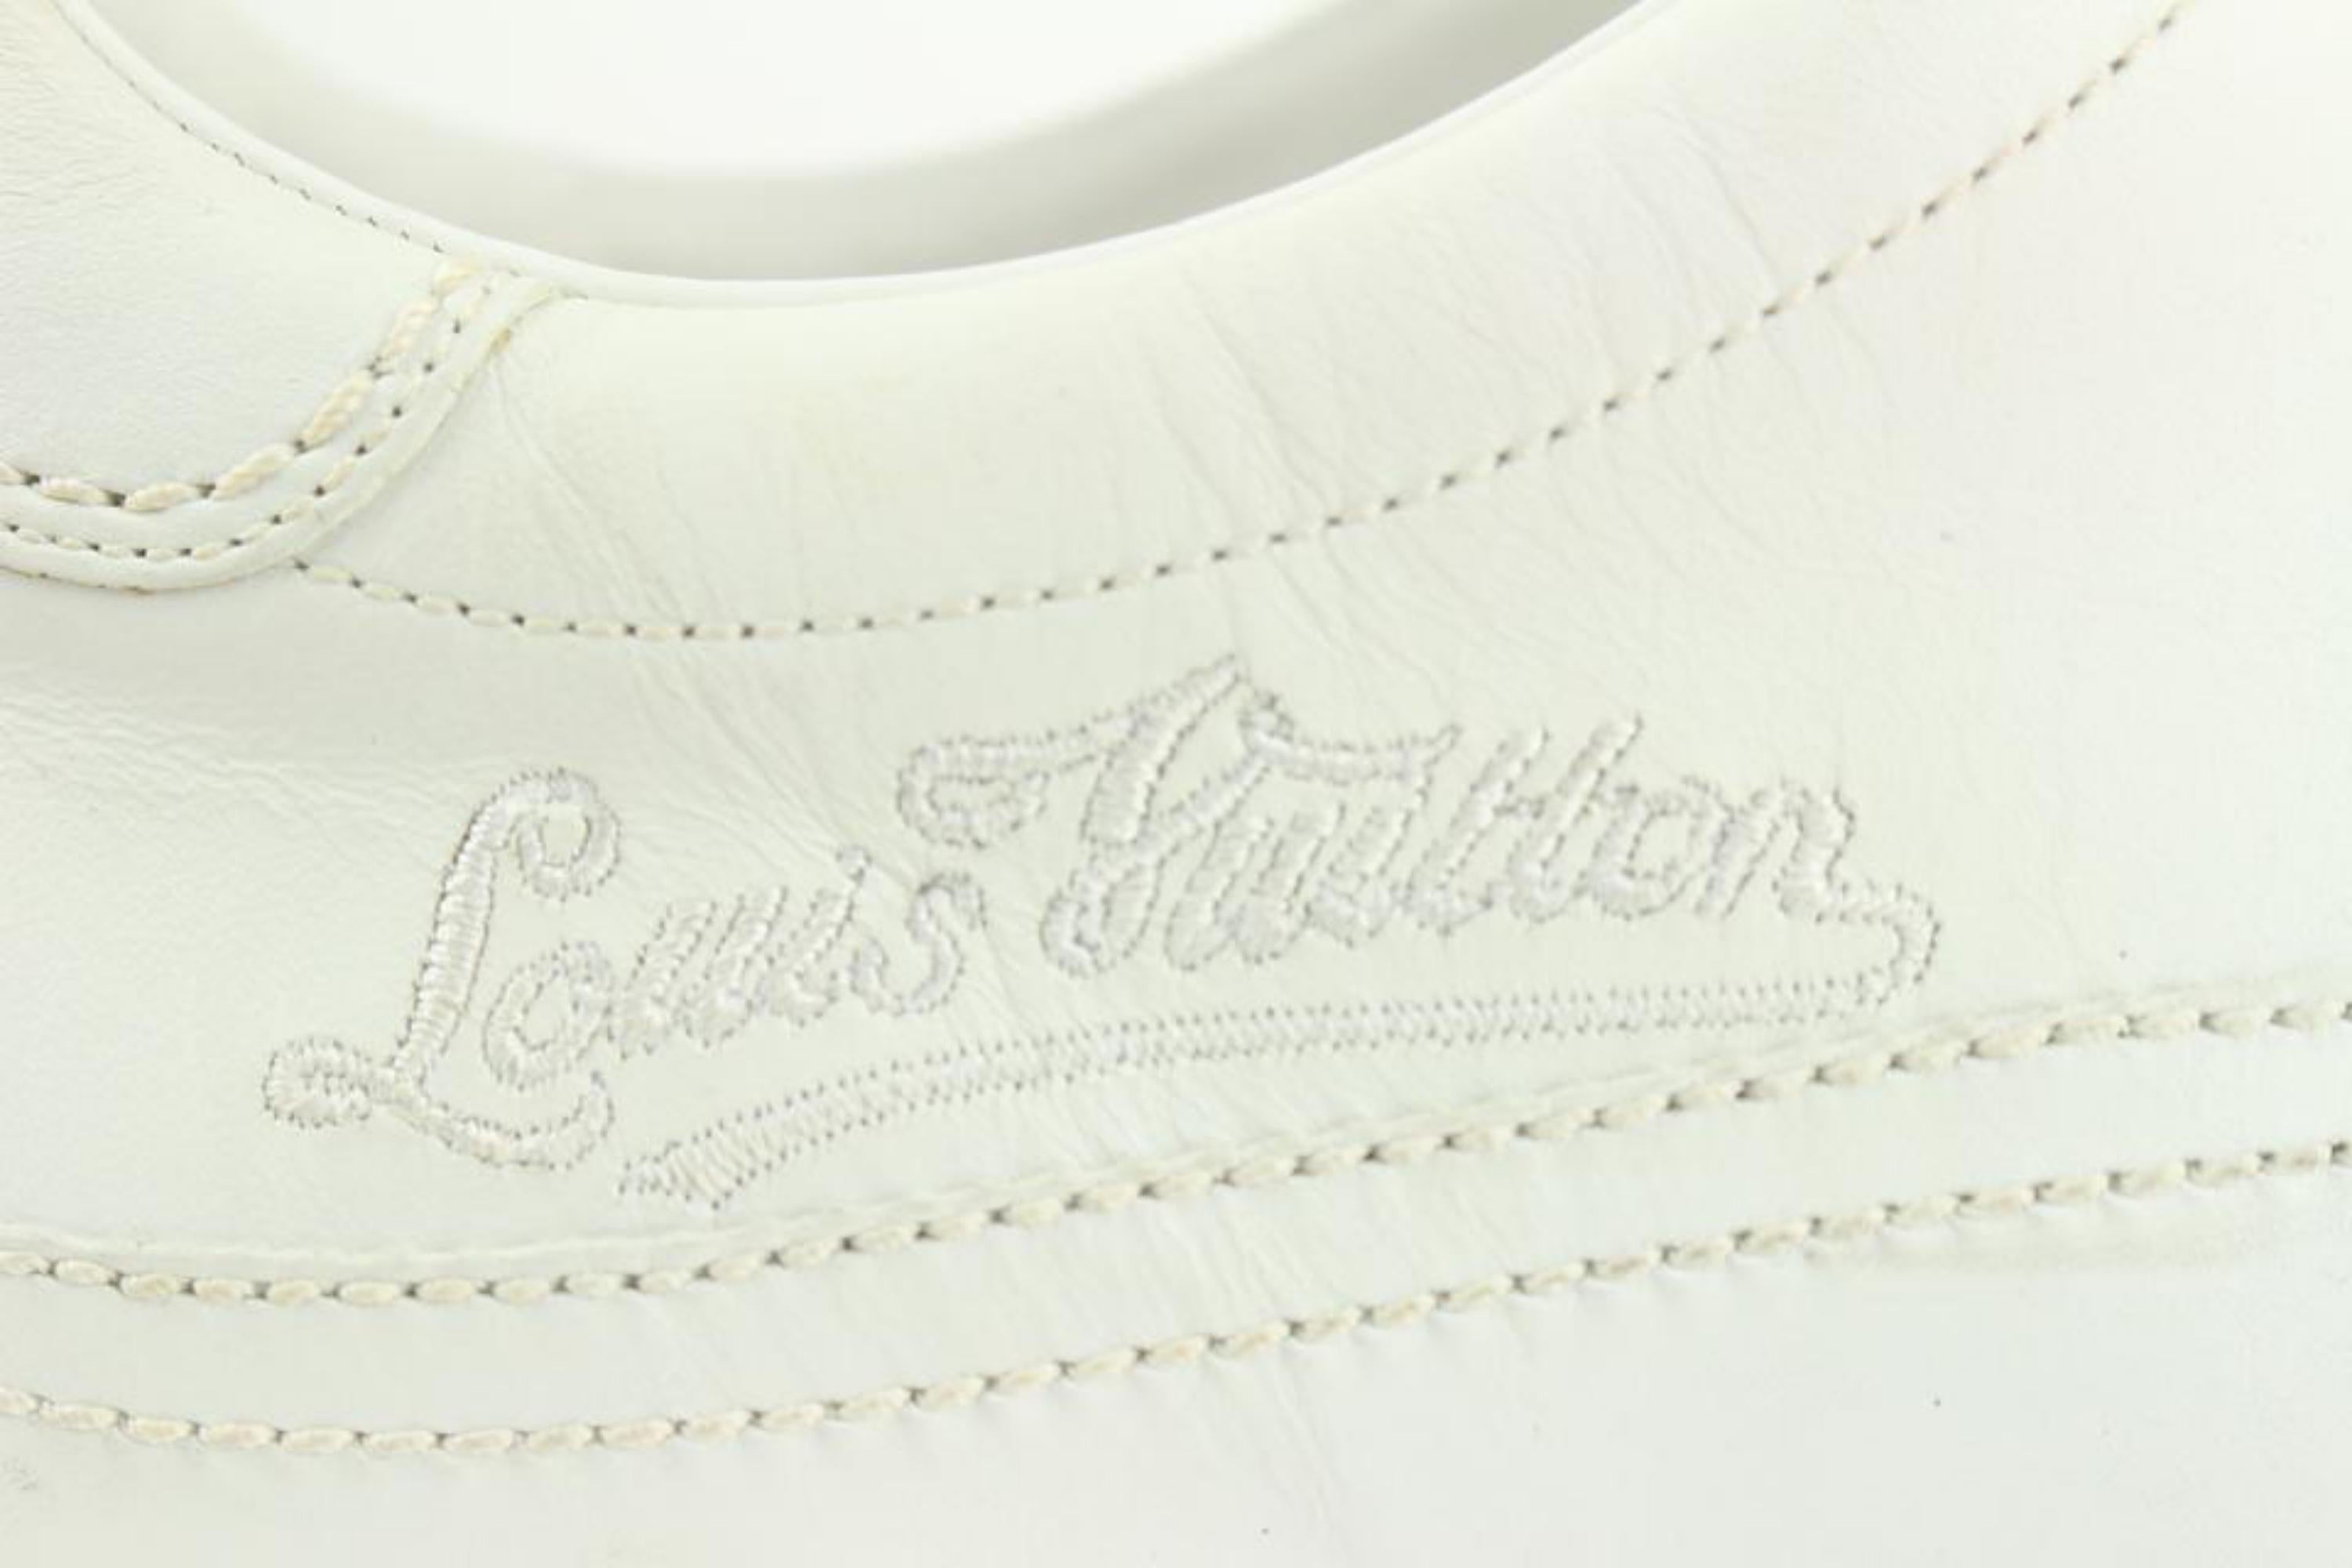 Louis Vuitton Rare Men's 10.5 US White Sneaker 5L1228 For Sale 6